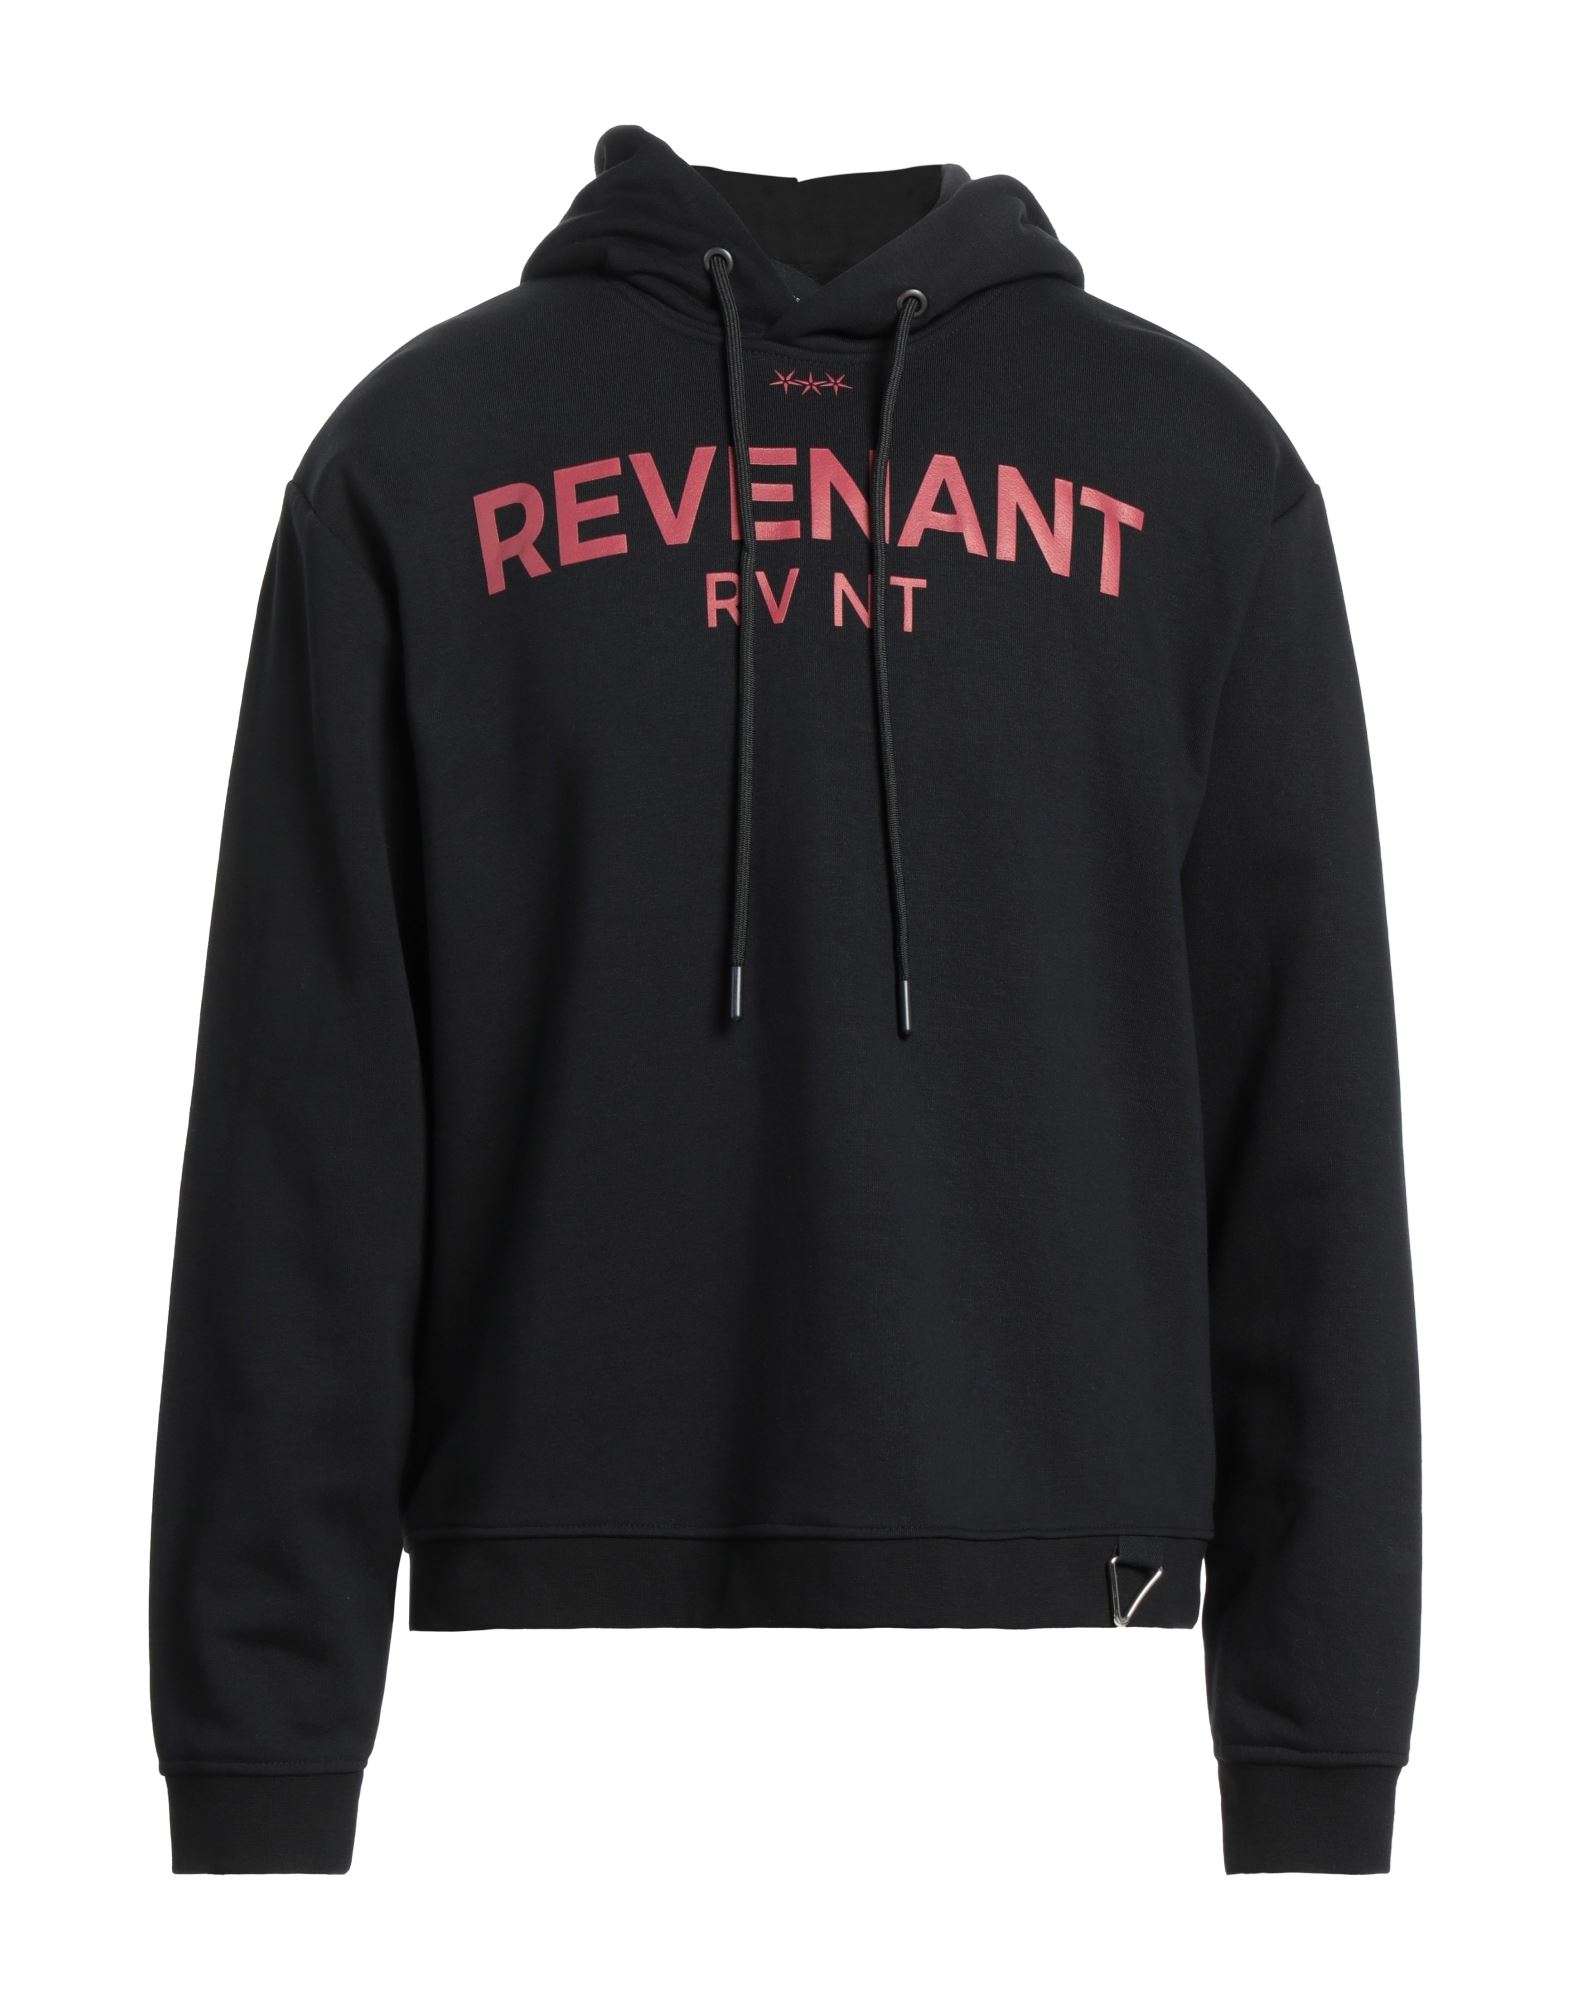 Revenant Rv Nt Sweatshirts In Black